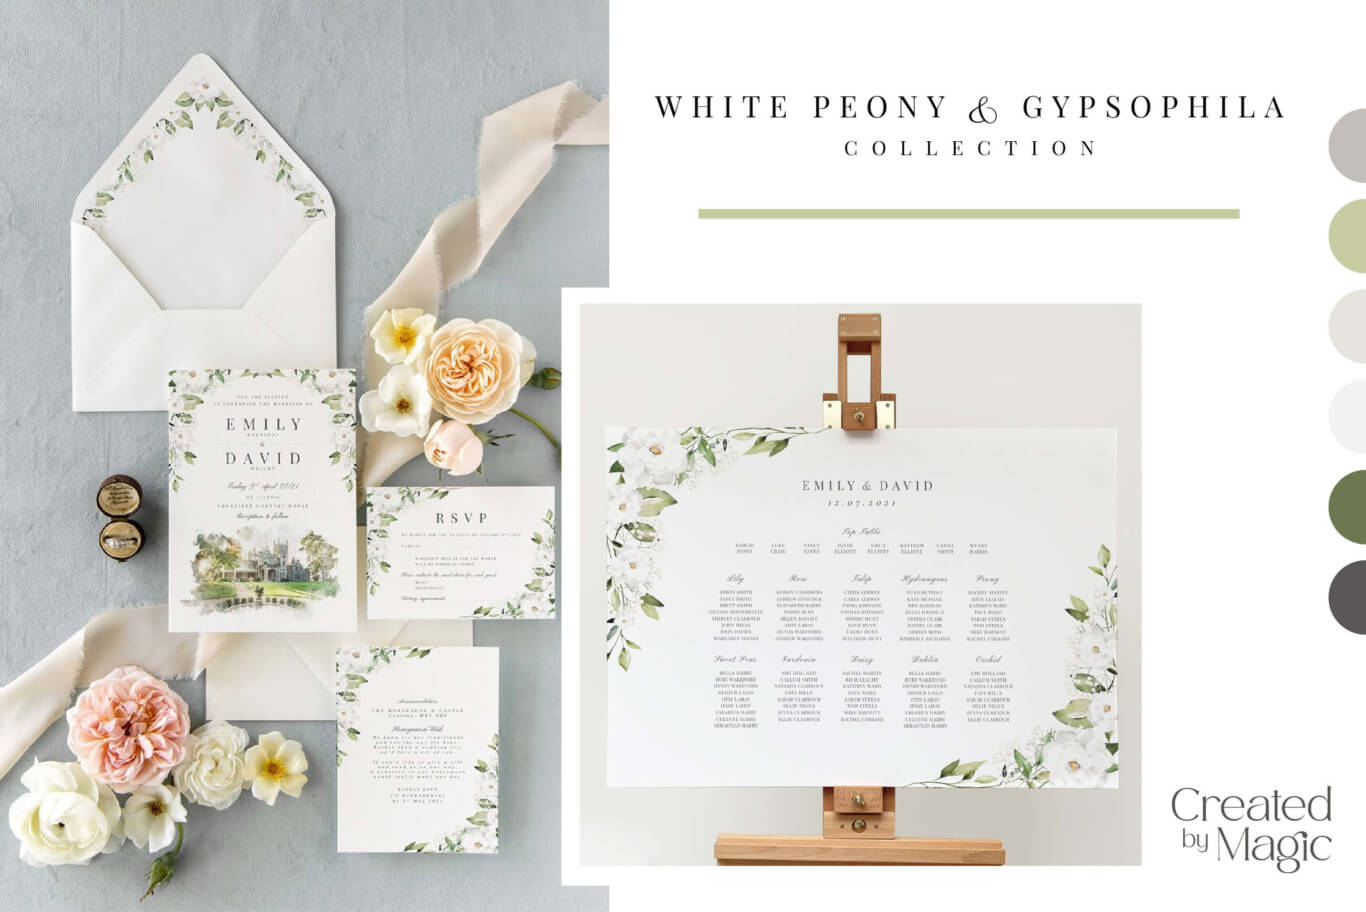 white peony and gypsophila wedding invitations collections